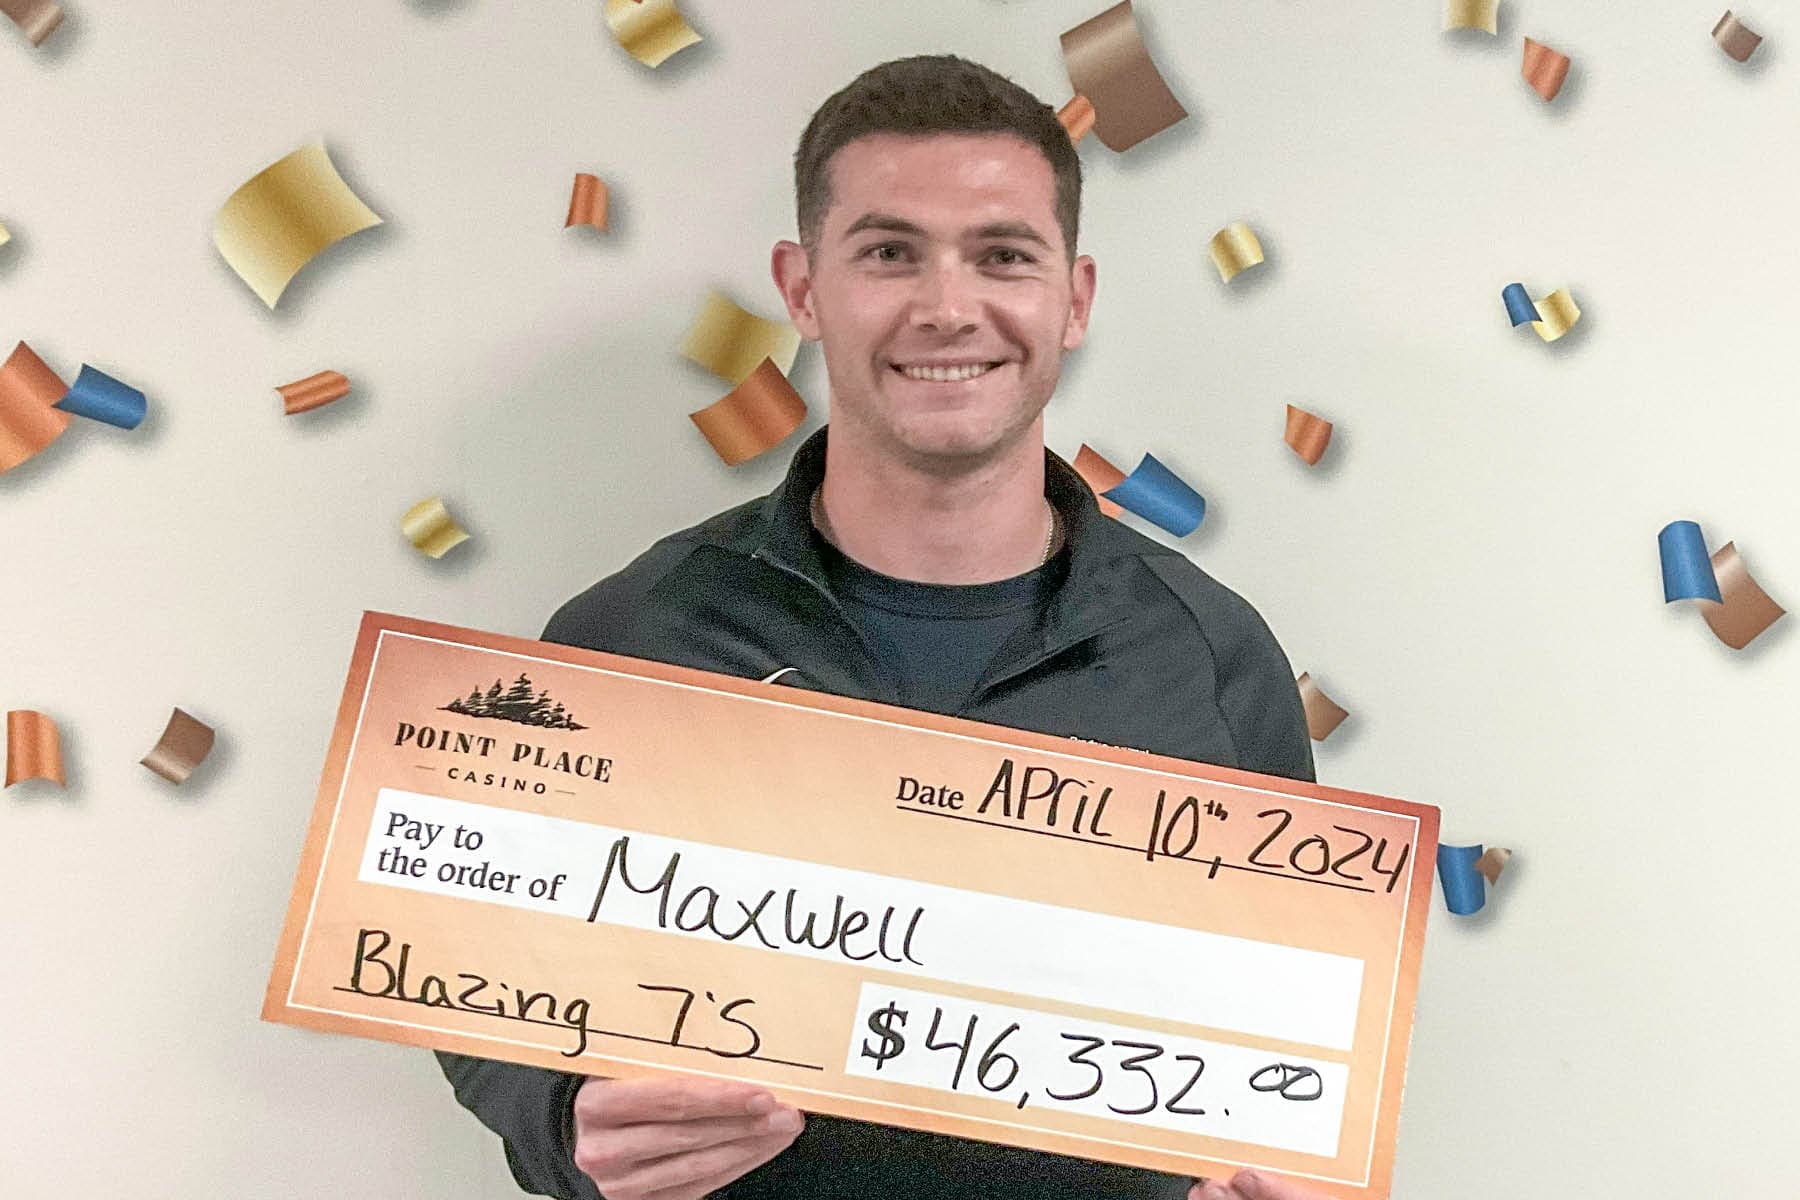 Maxwell won $46,332